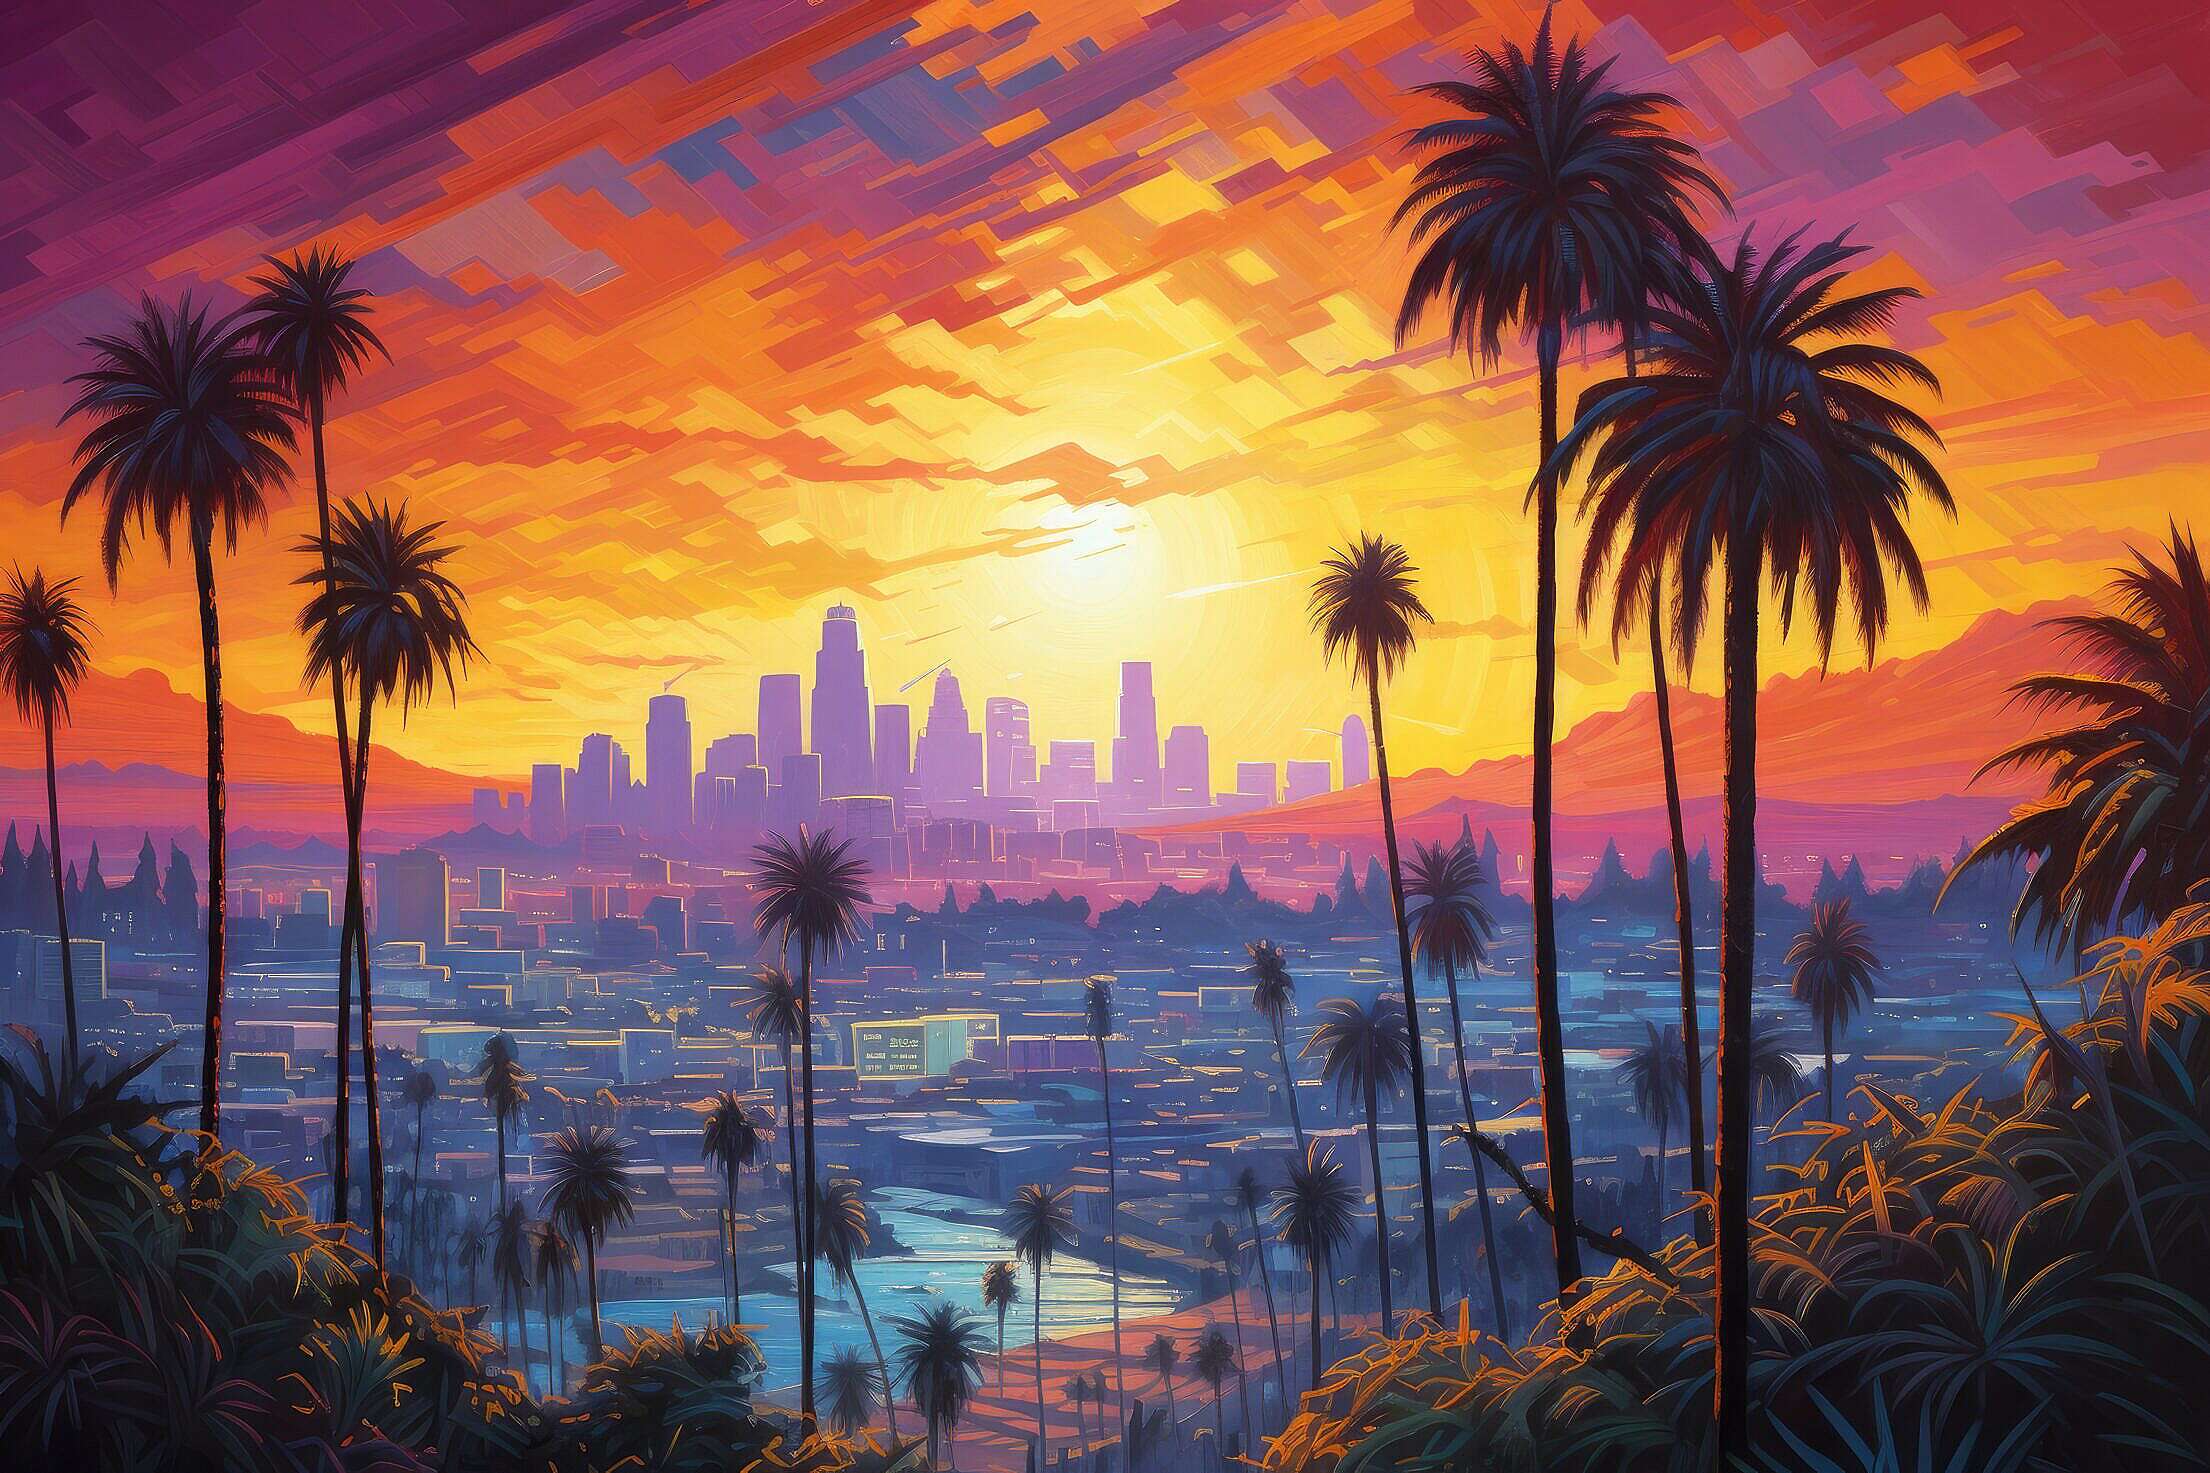 Sunset Over Los Angeles Painting Free Stock Photo | picjumbo